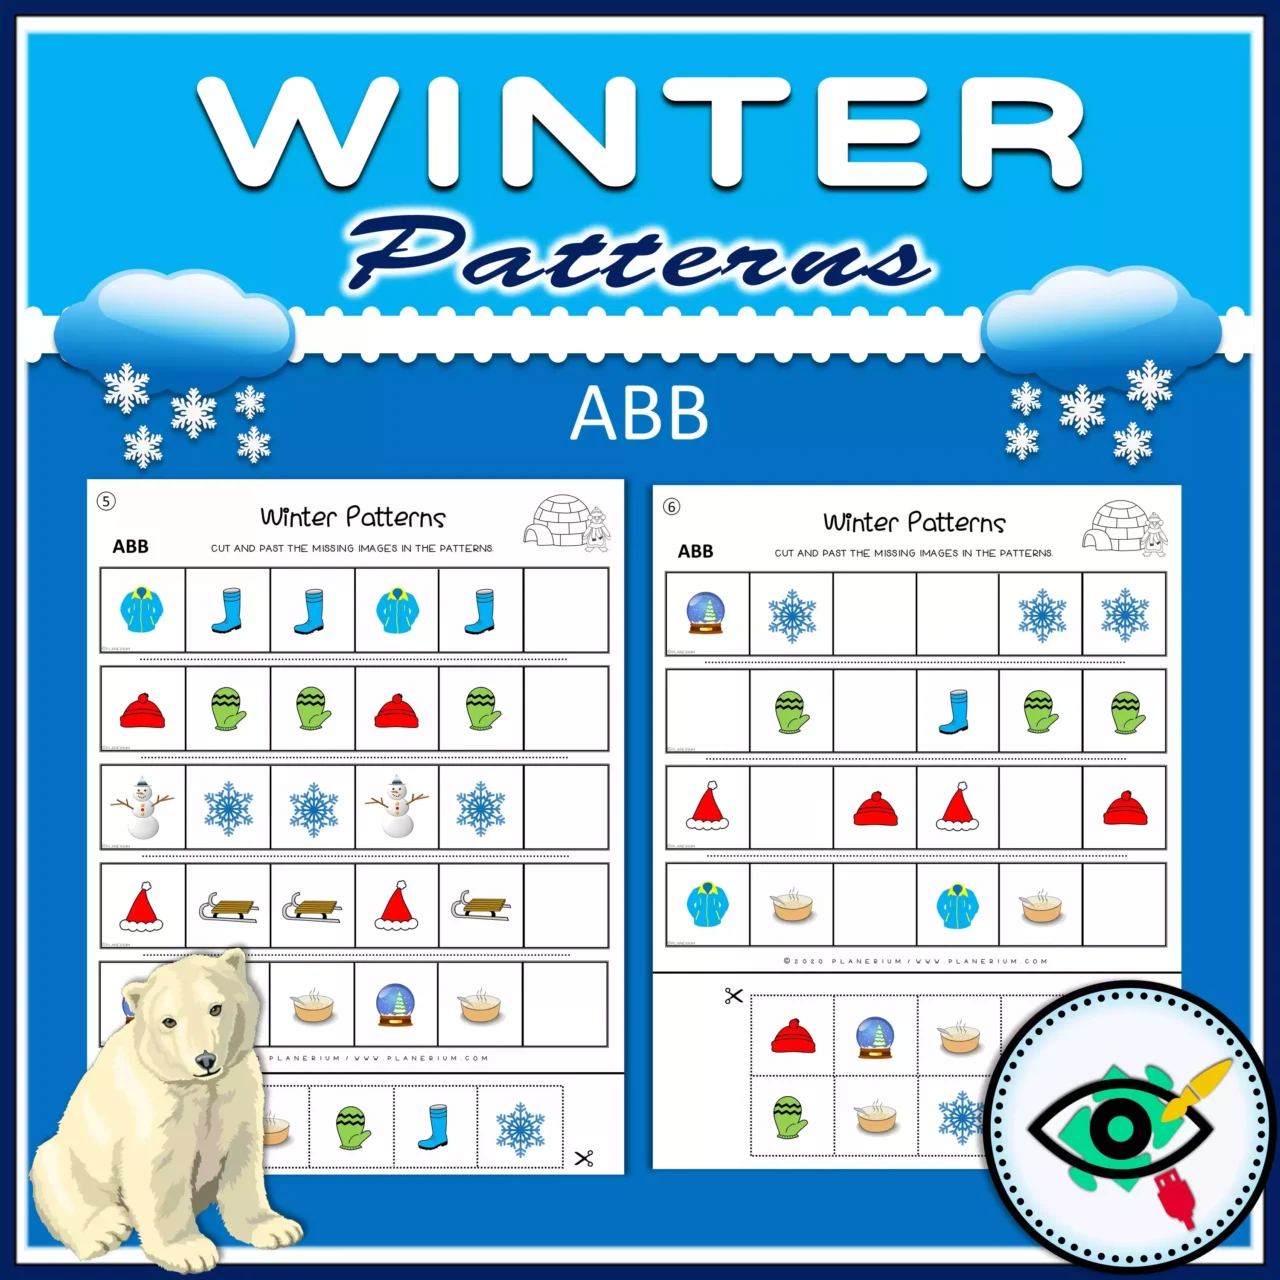 Winter - Patterns Activity - Image Title 4